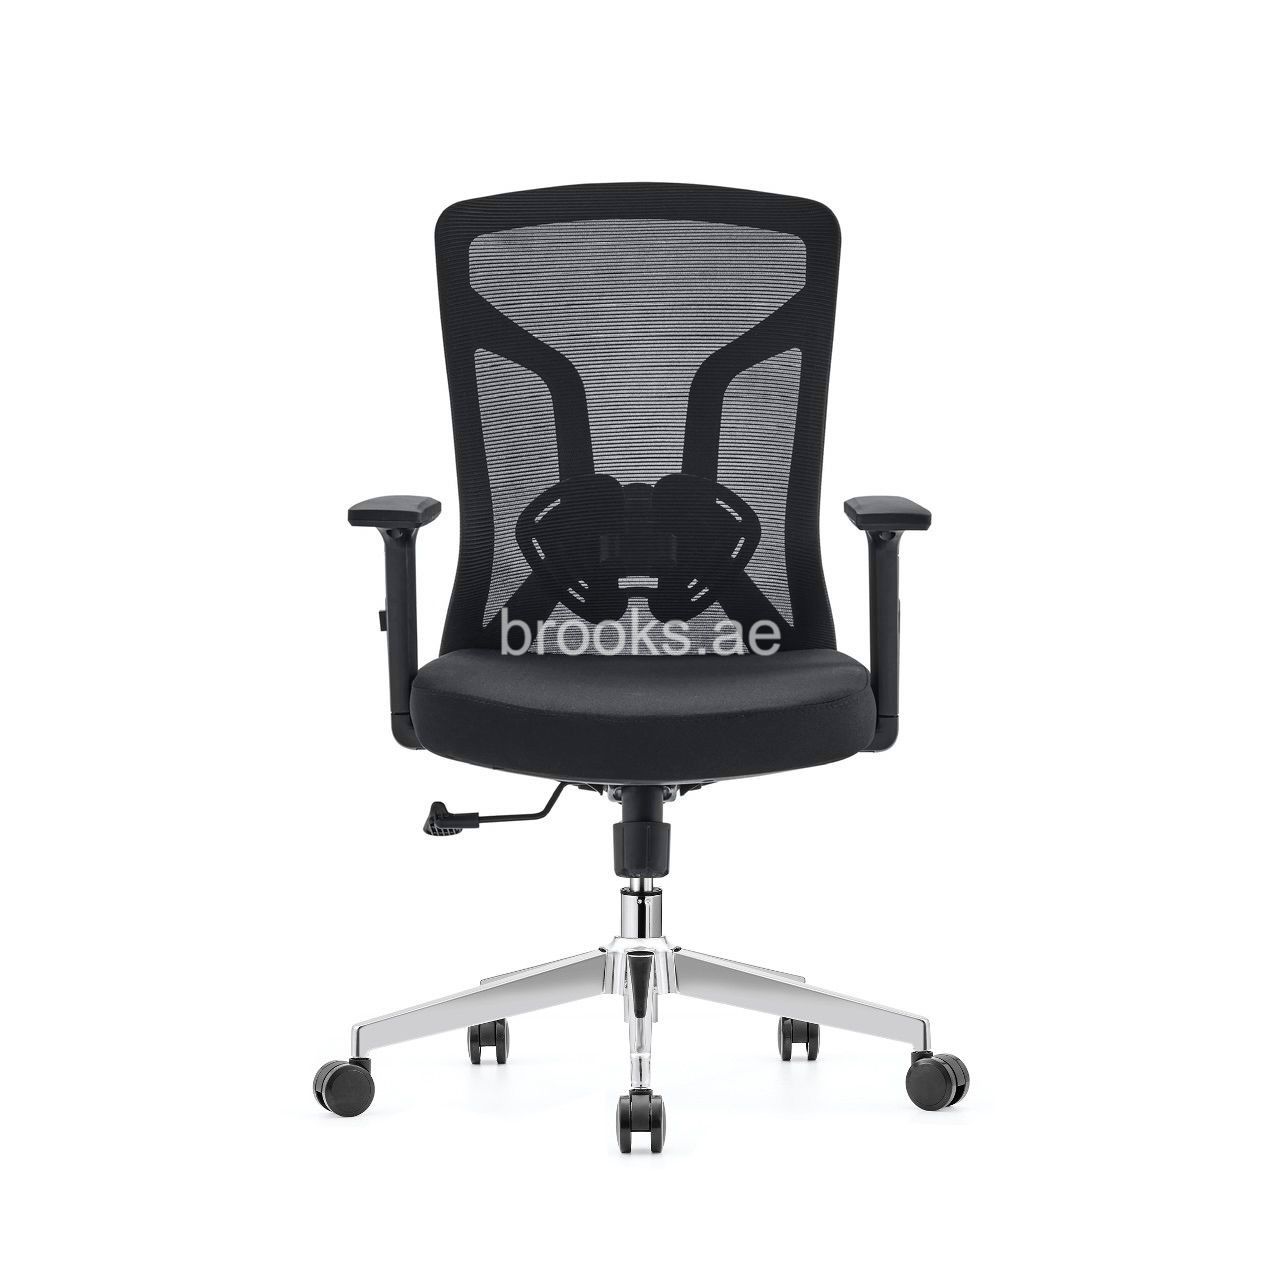 Neo Medium Back Chair with chrome legs - BROOKS BINS